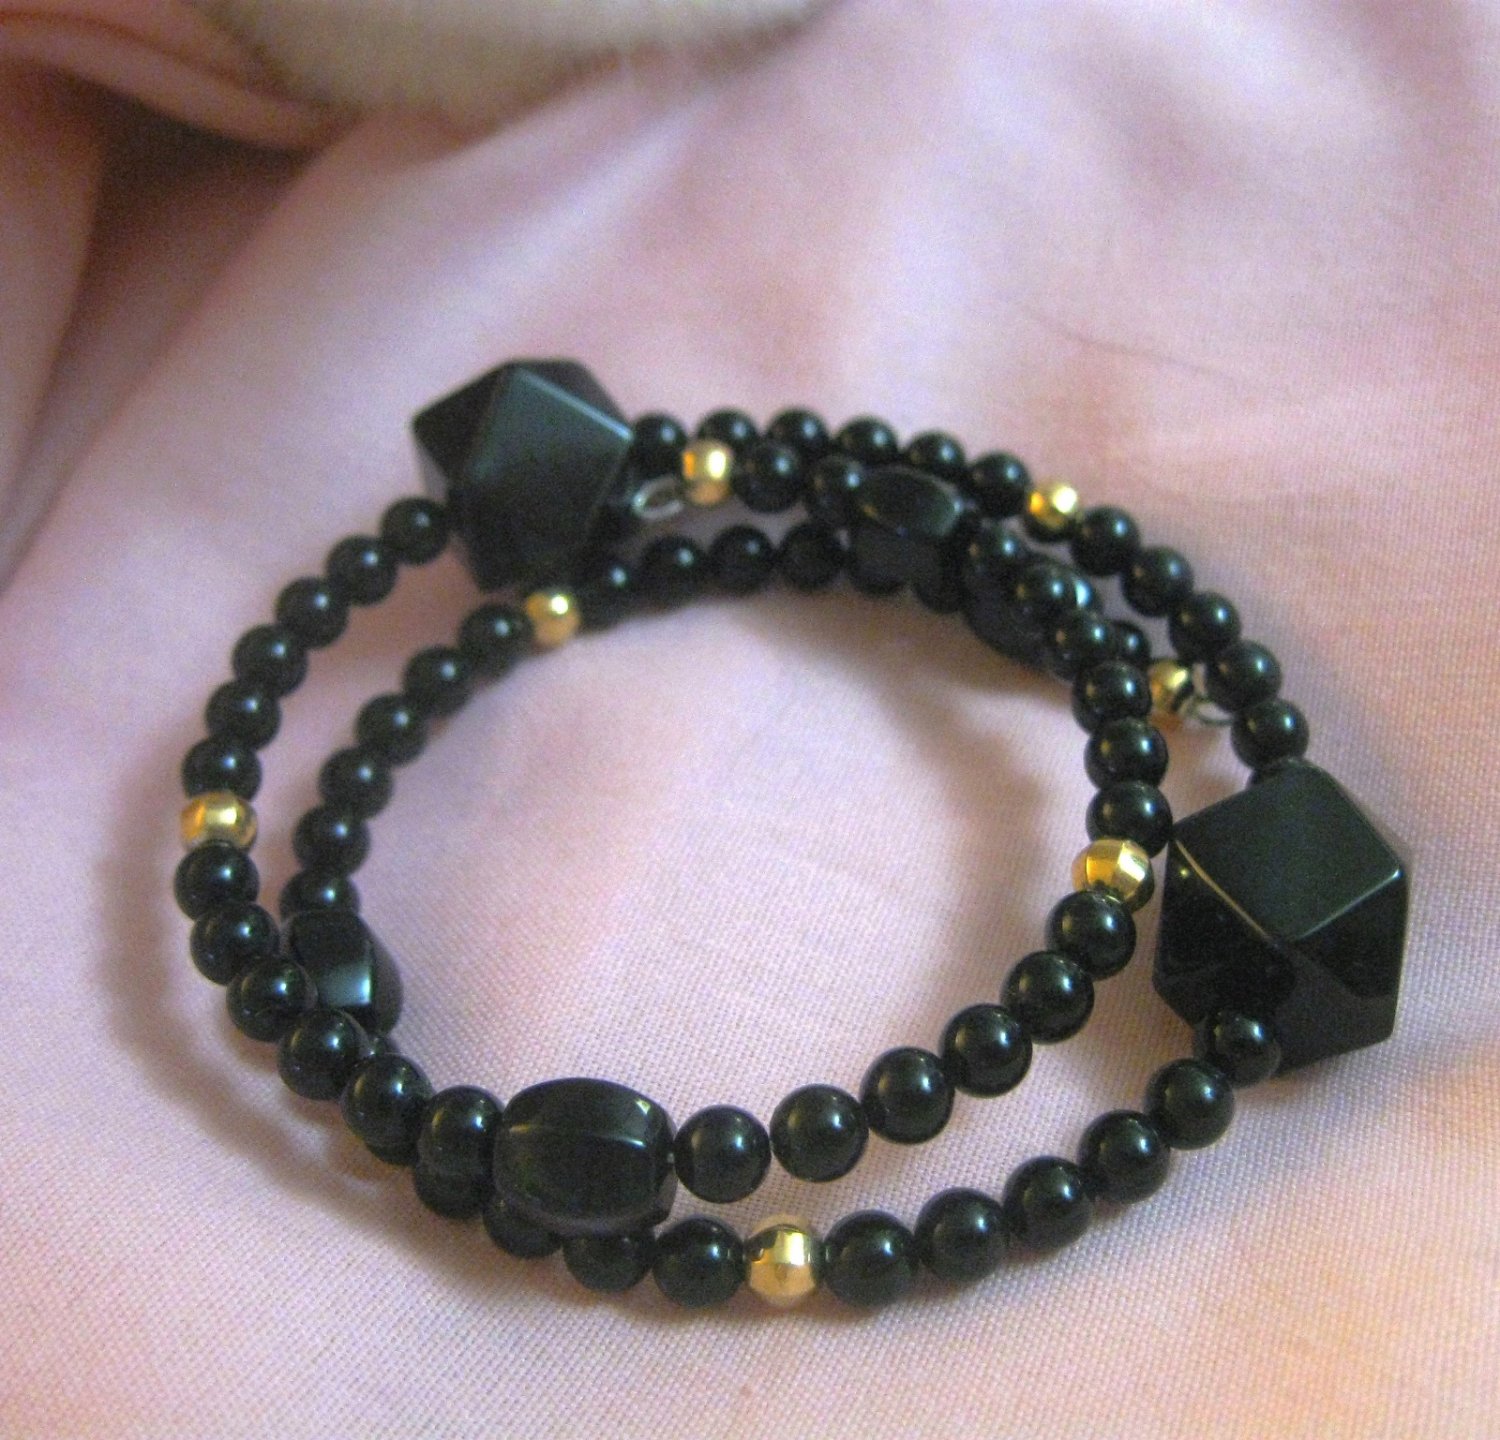 Vintage Black Onyx Beaded Wrap Bracelet, Memory Wire Genuine Gemstone Upcycled Bracelet